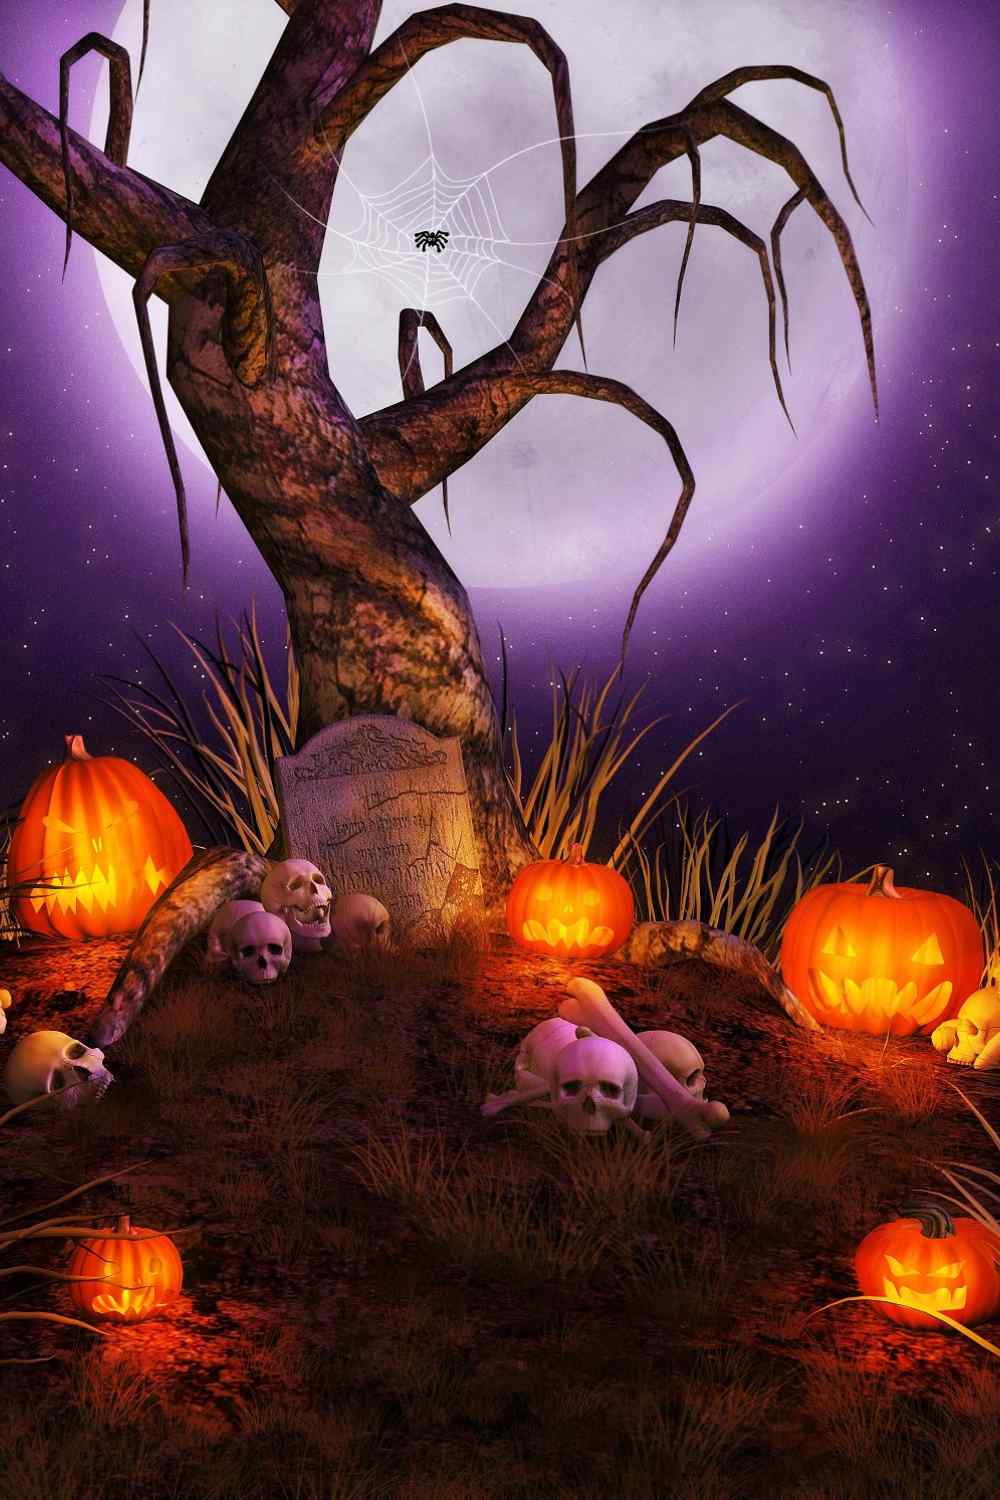 Spooky Halloween Skull Pumpkin Spider On The Tree Backdrop IBD-246871 size:1x1.5